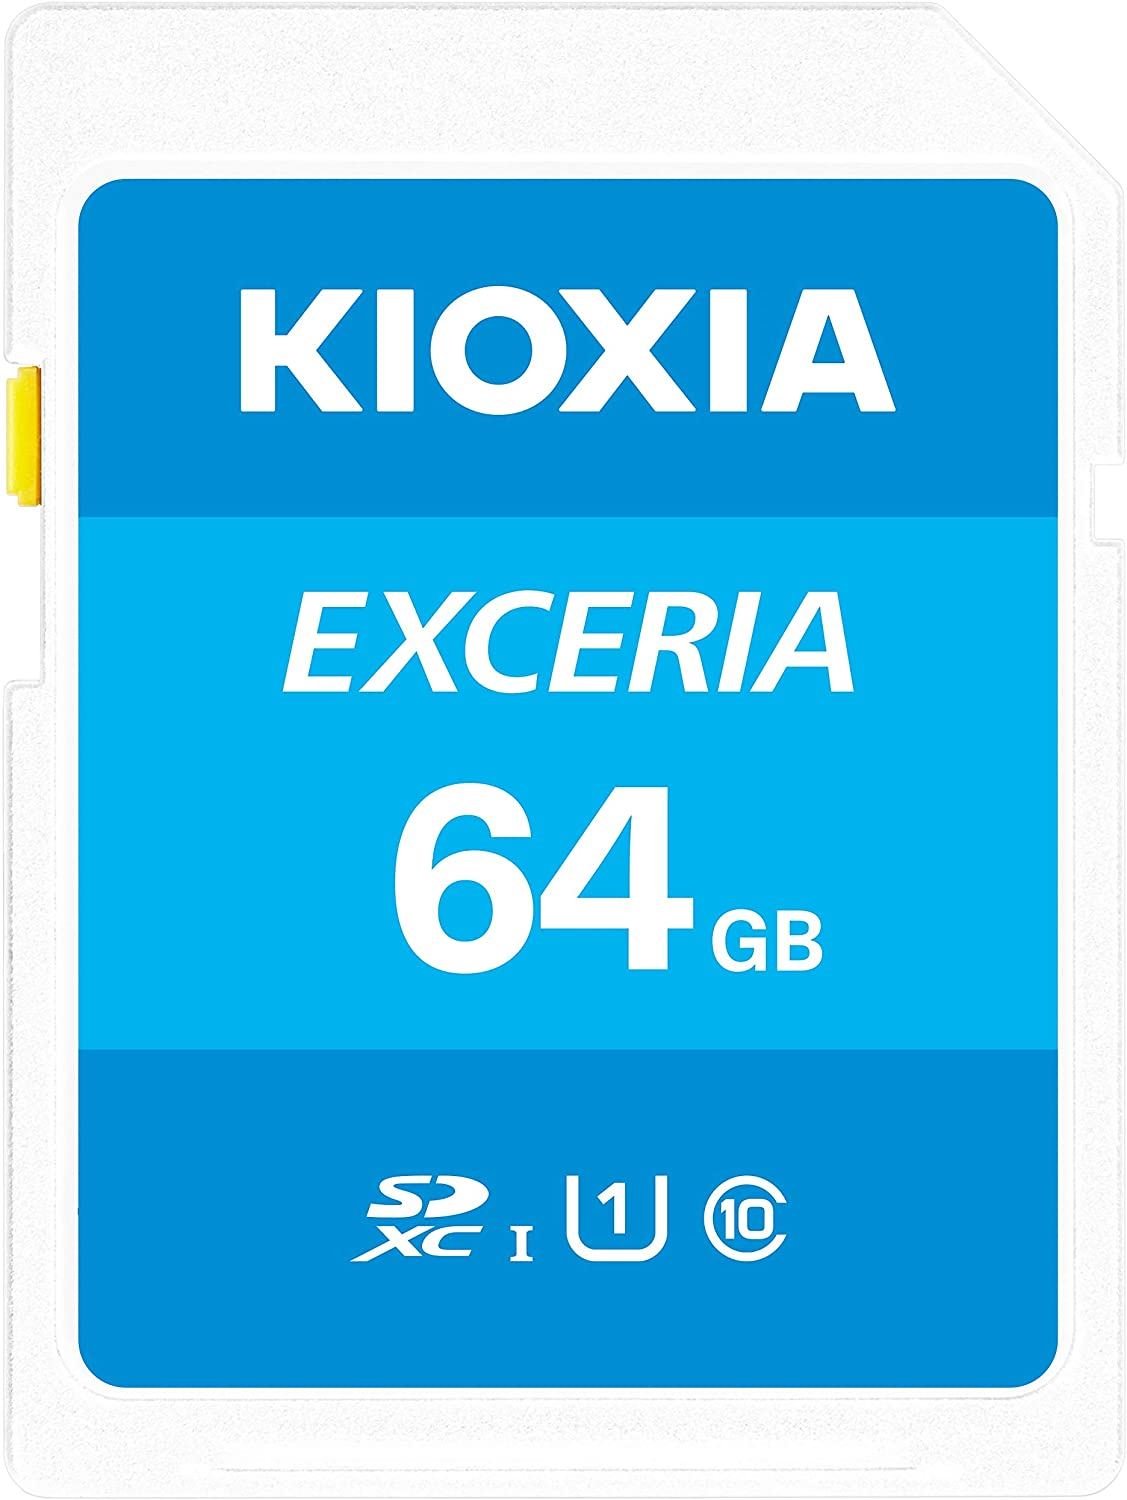 KIOXIA LNEX1L064GG4 64GB NormalSD EXCERIA C10 U1 UHS1 R100 Hafıza kartı